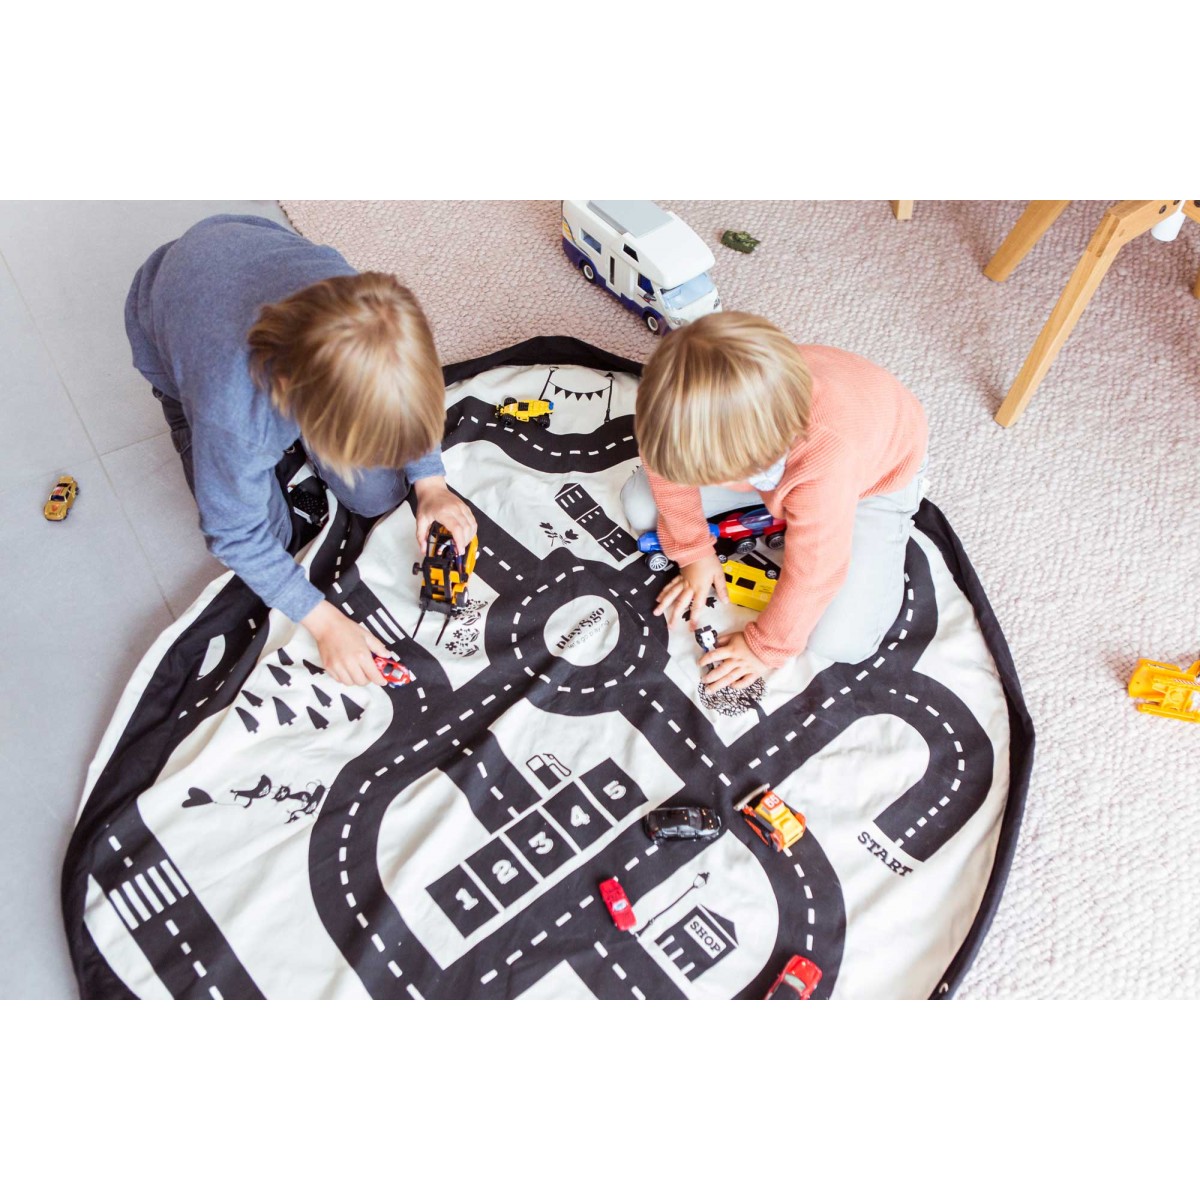 Play & Go 2 1 Speelgoedkleed opbergzak - roadmap kopen? - MyKidsToys